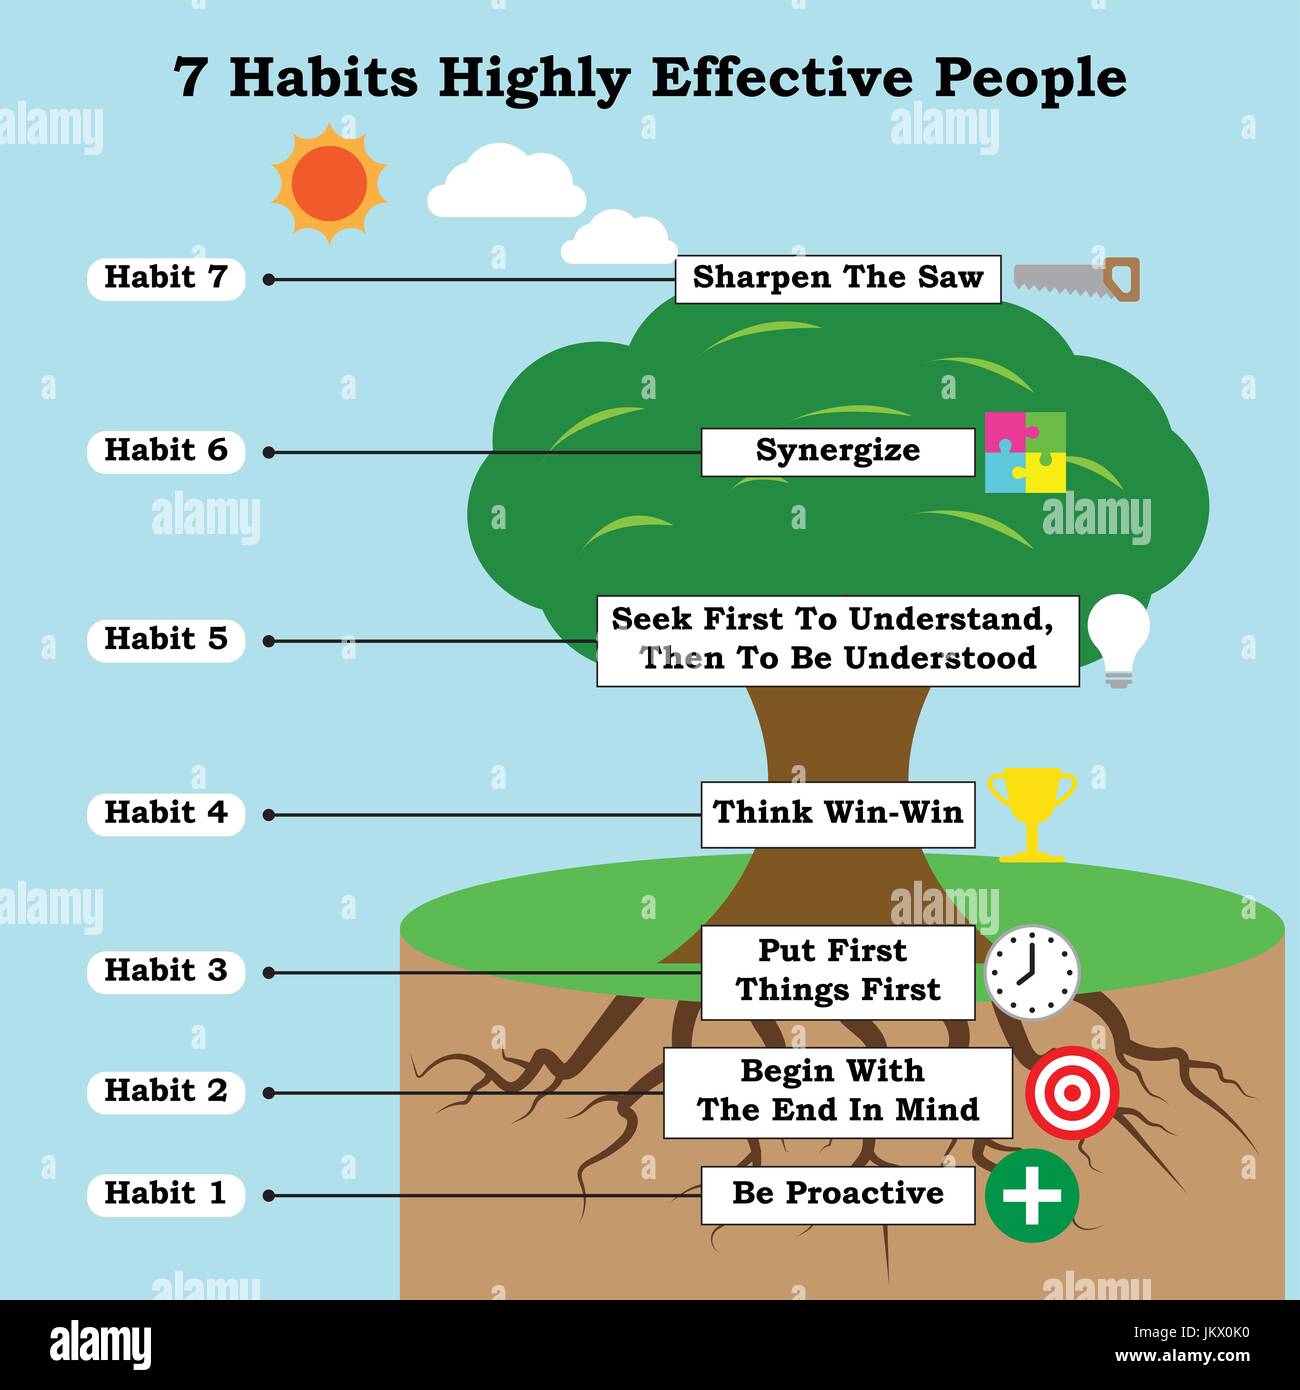 7 Habits Tree Diagram